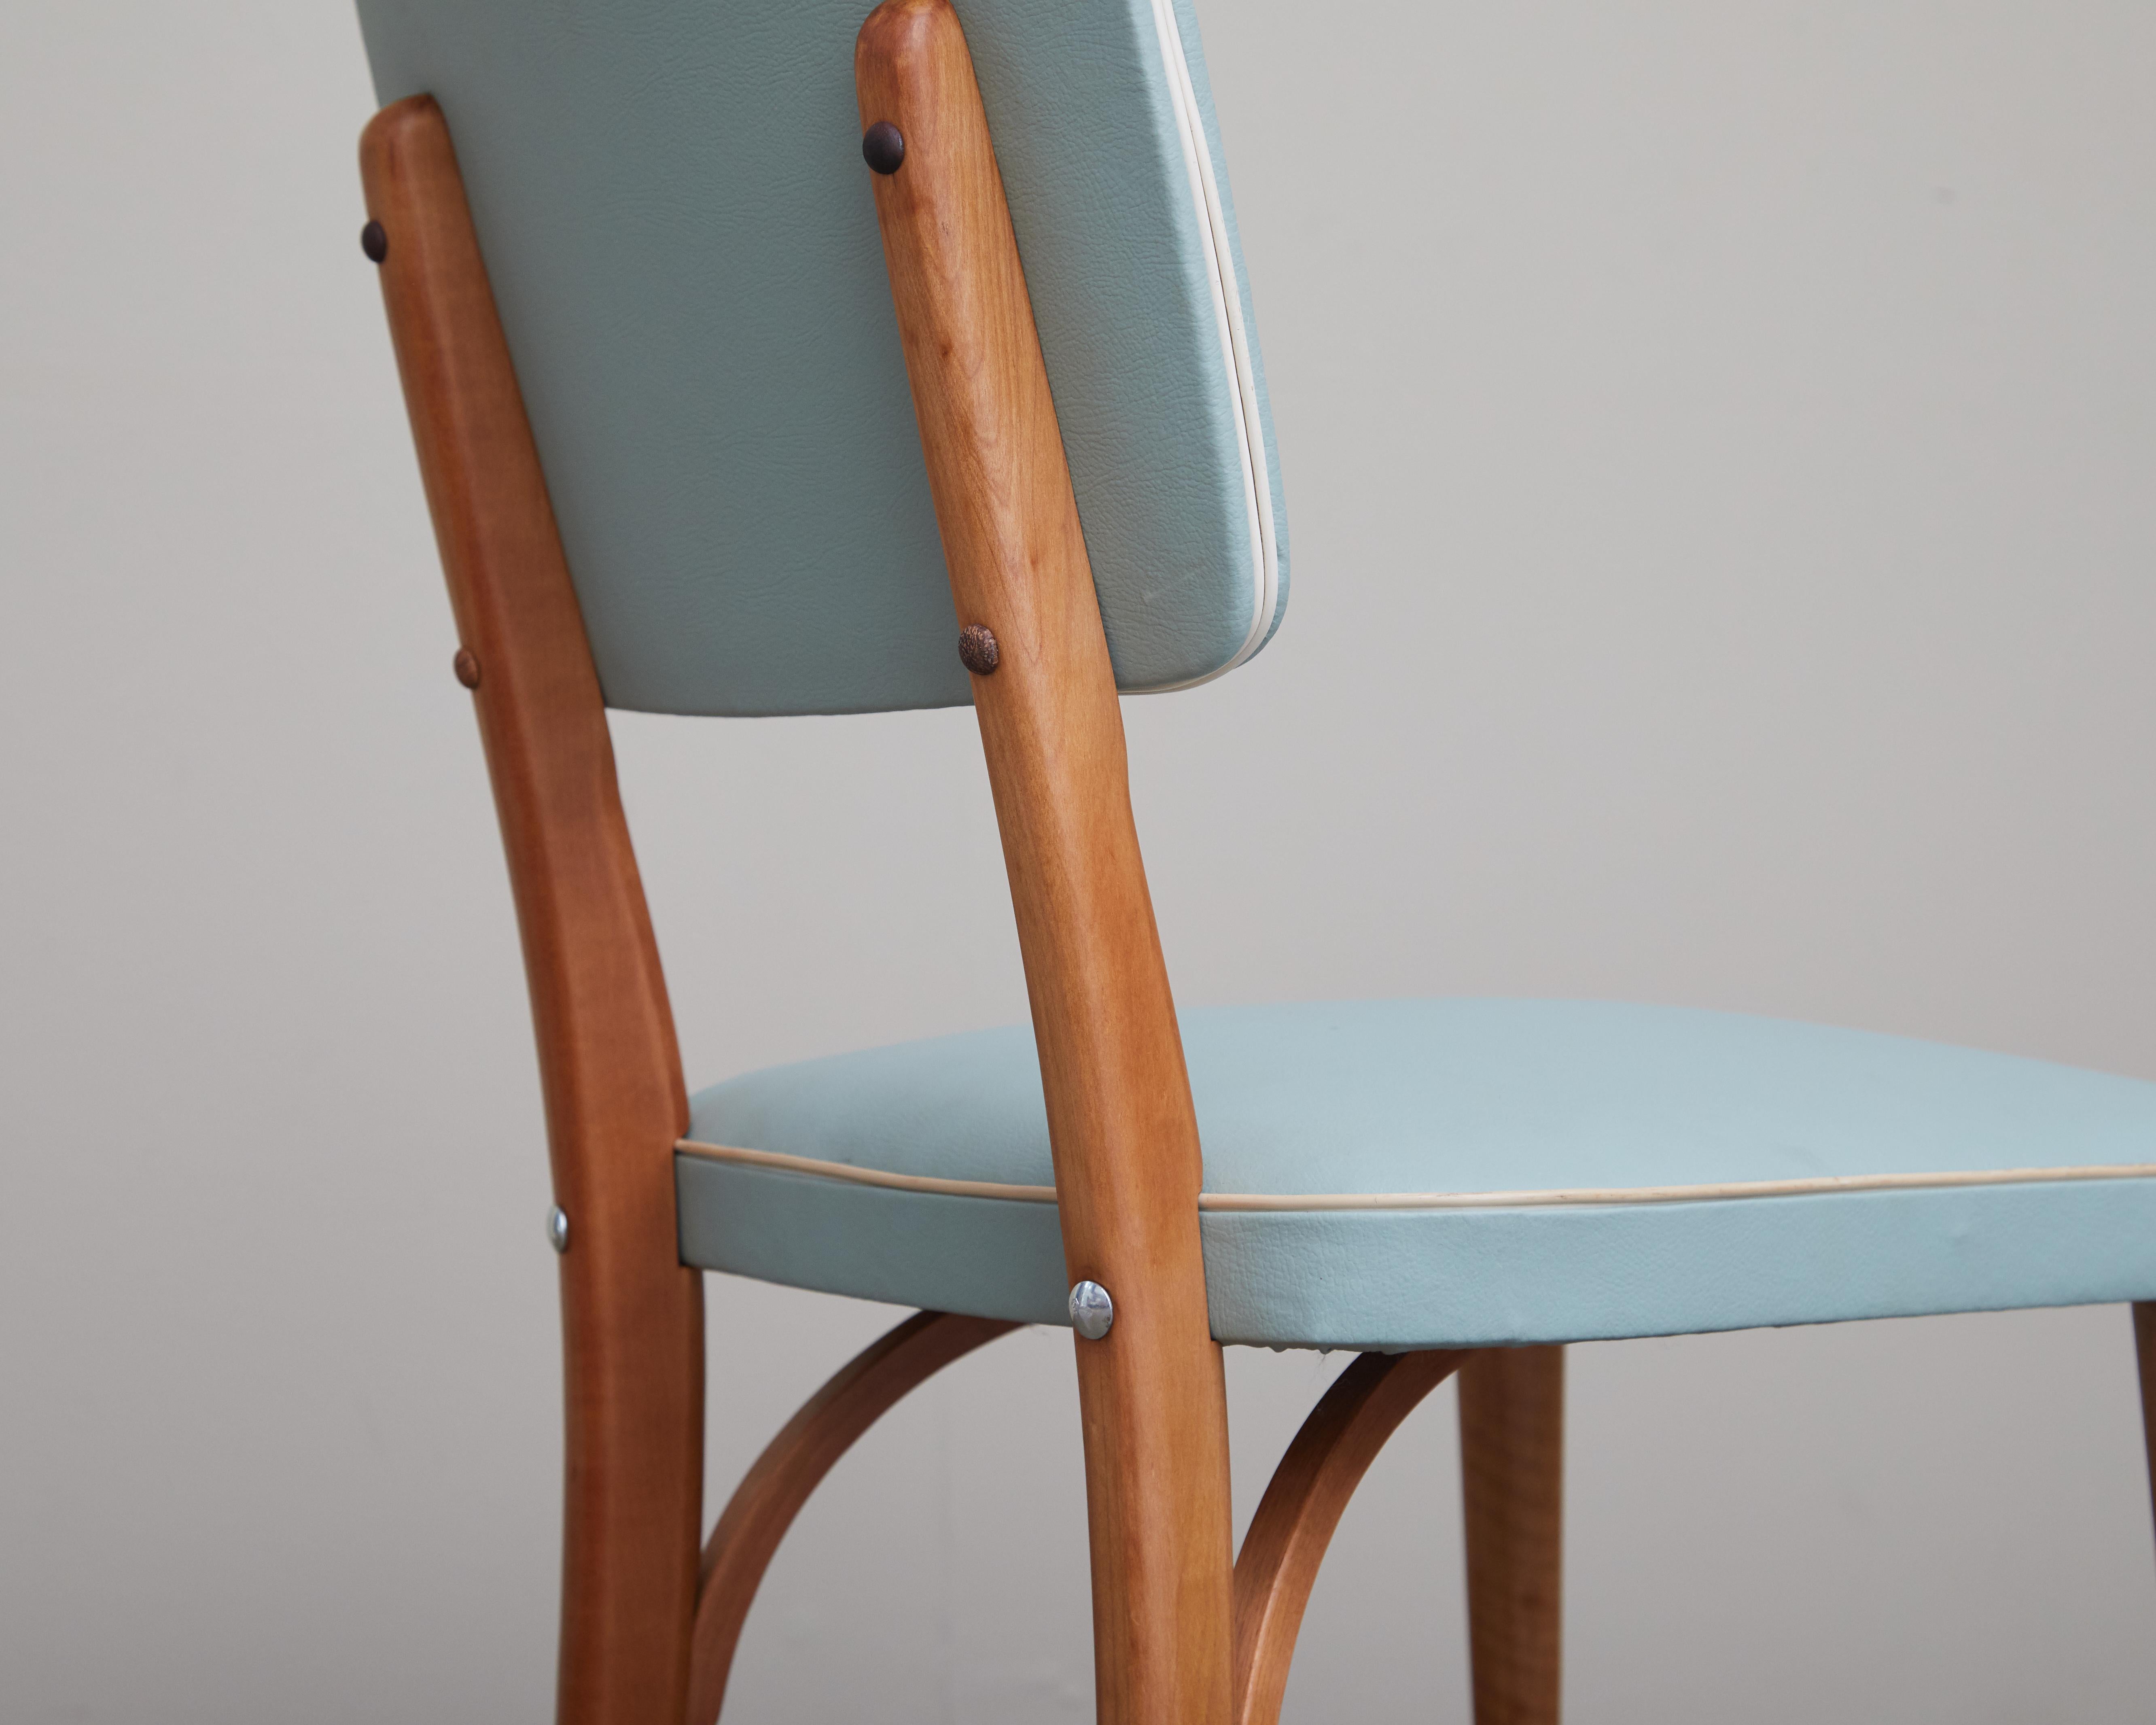 Woodwork Brazilian Mid-century Chairs by Industria Cama Patente